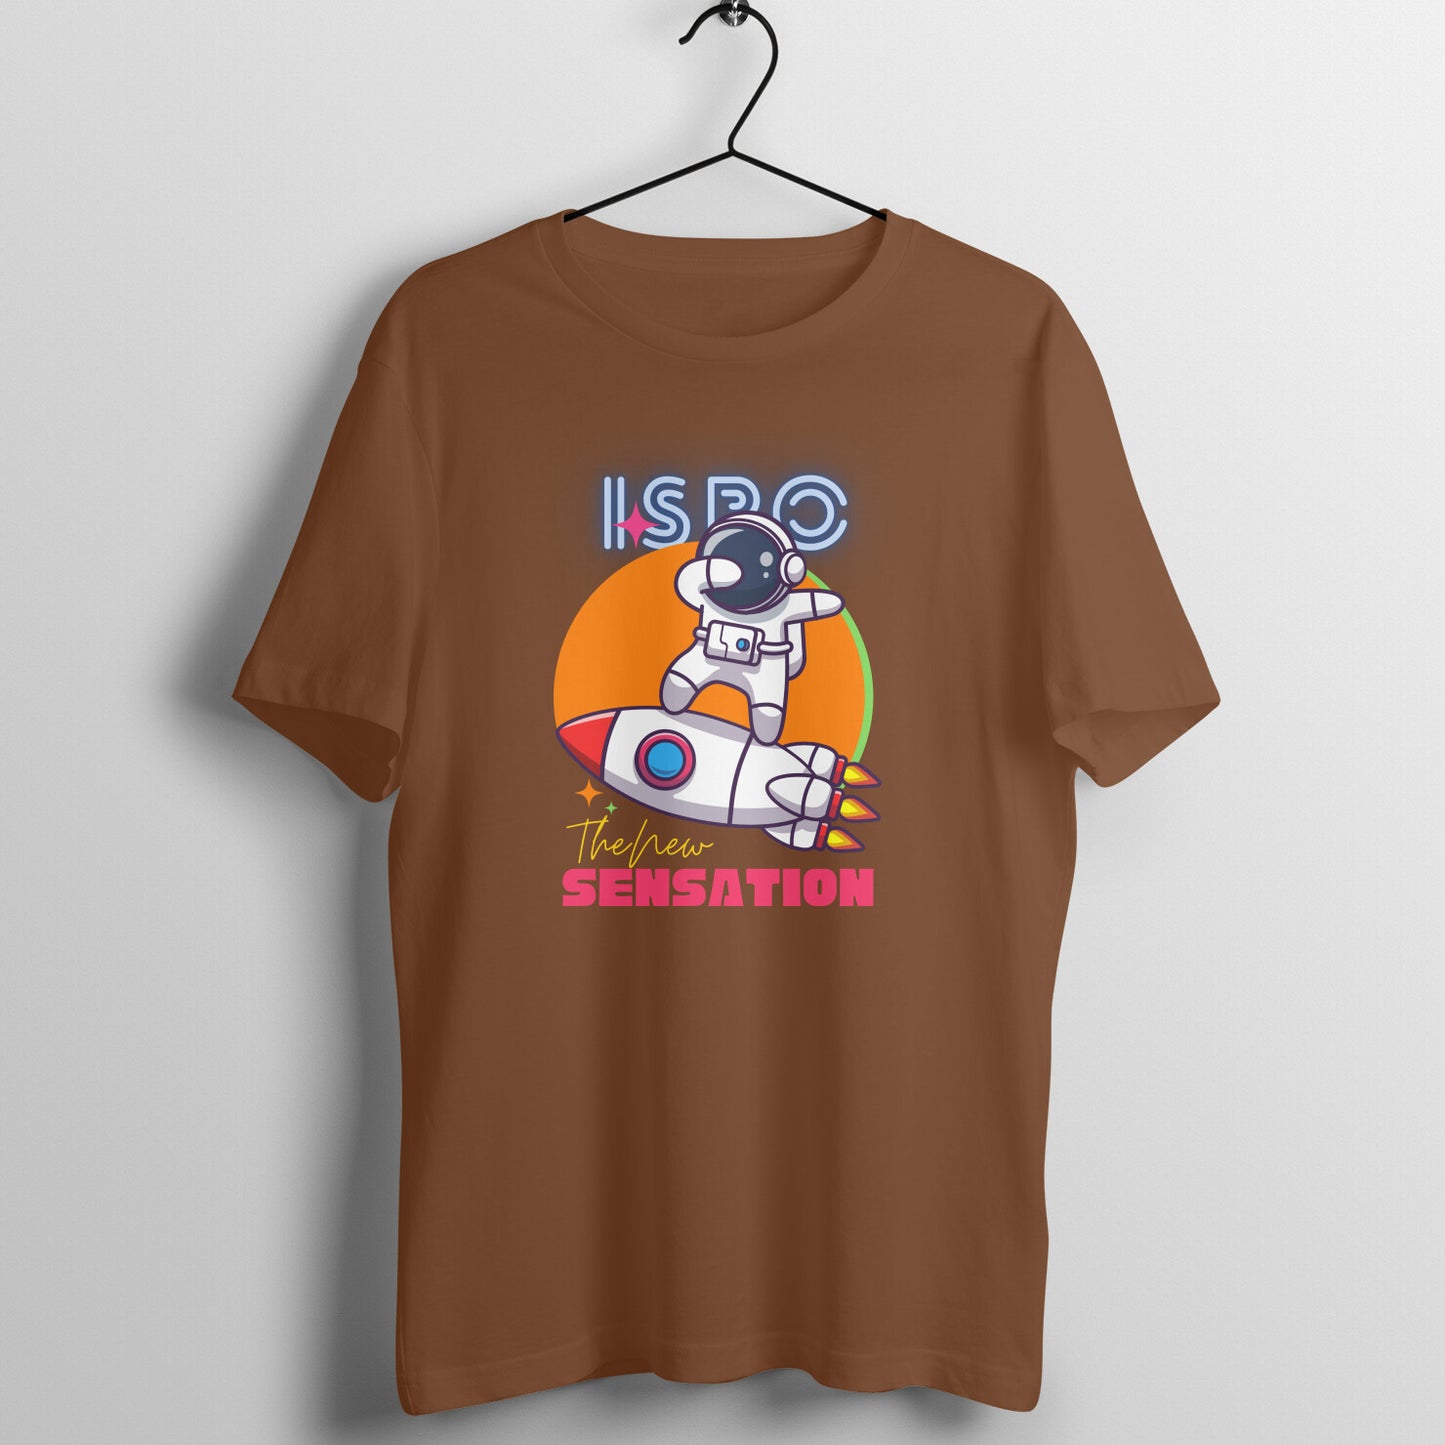 ISRO The New Sensation Unisex T-Shirt